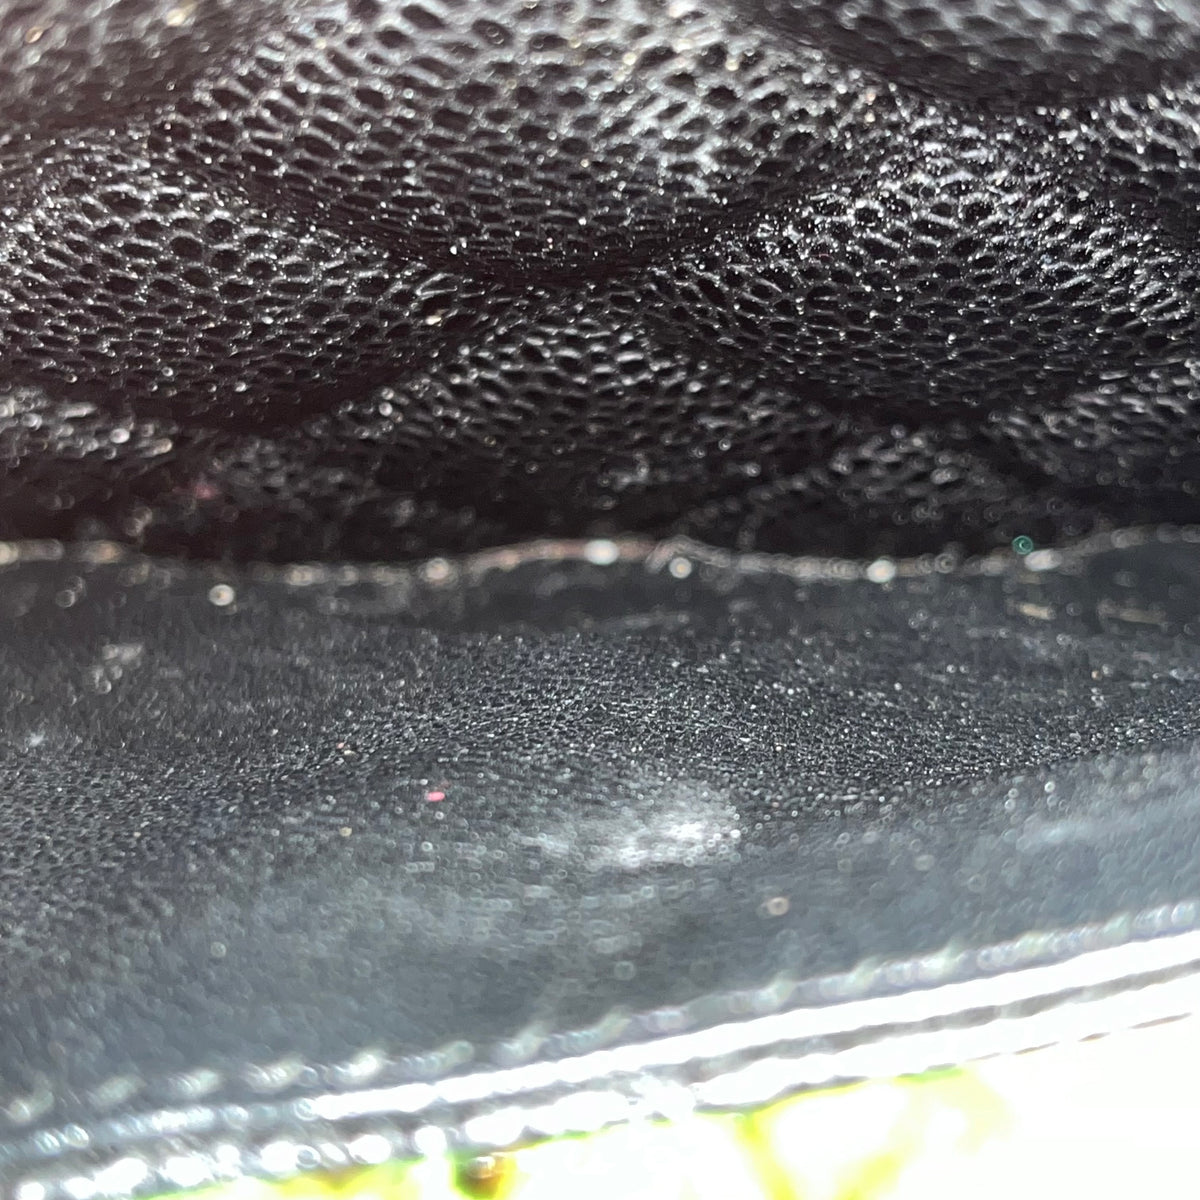 Chanel Black Caviar Jumbo Single Flap Bag